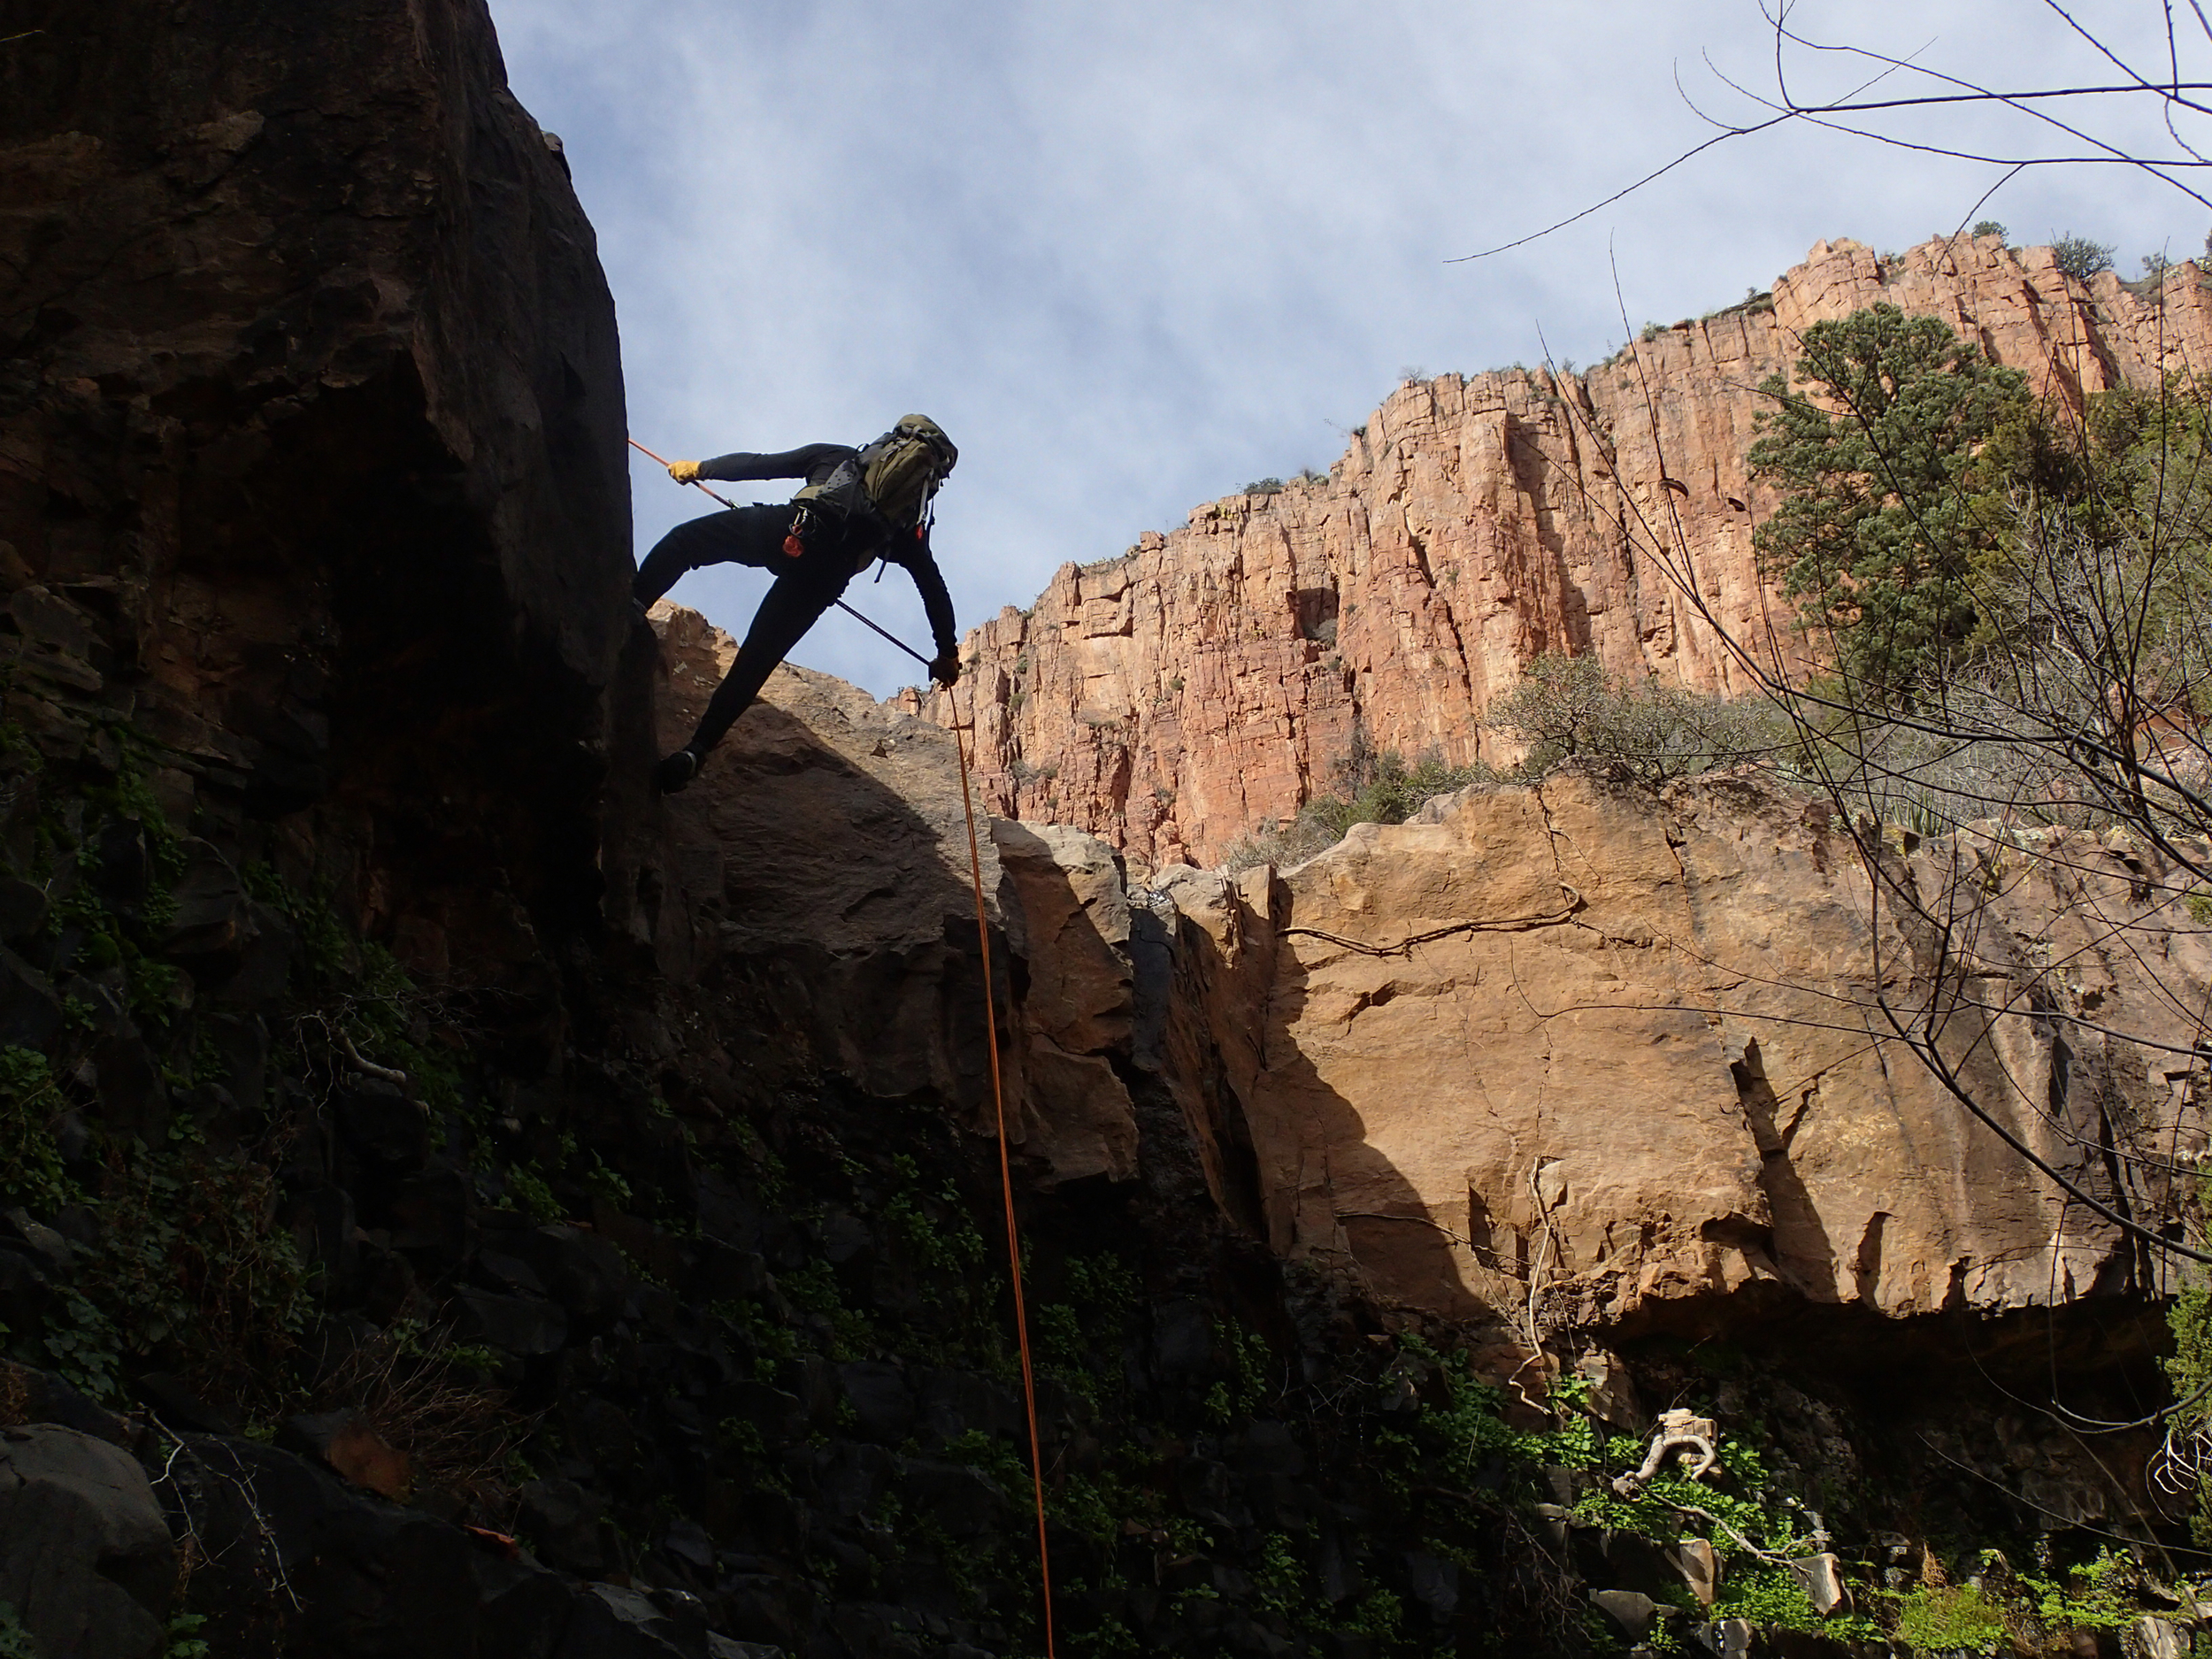 Waterslides Canyon, AZ - On Rope Canyoneering